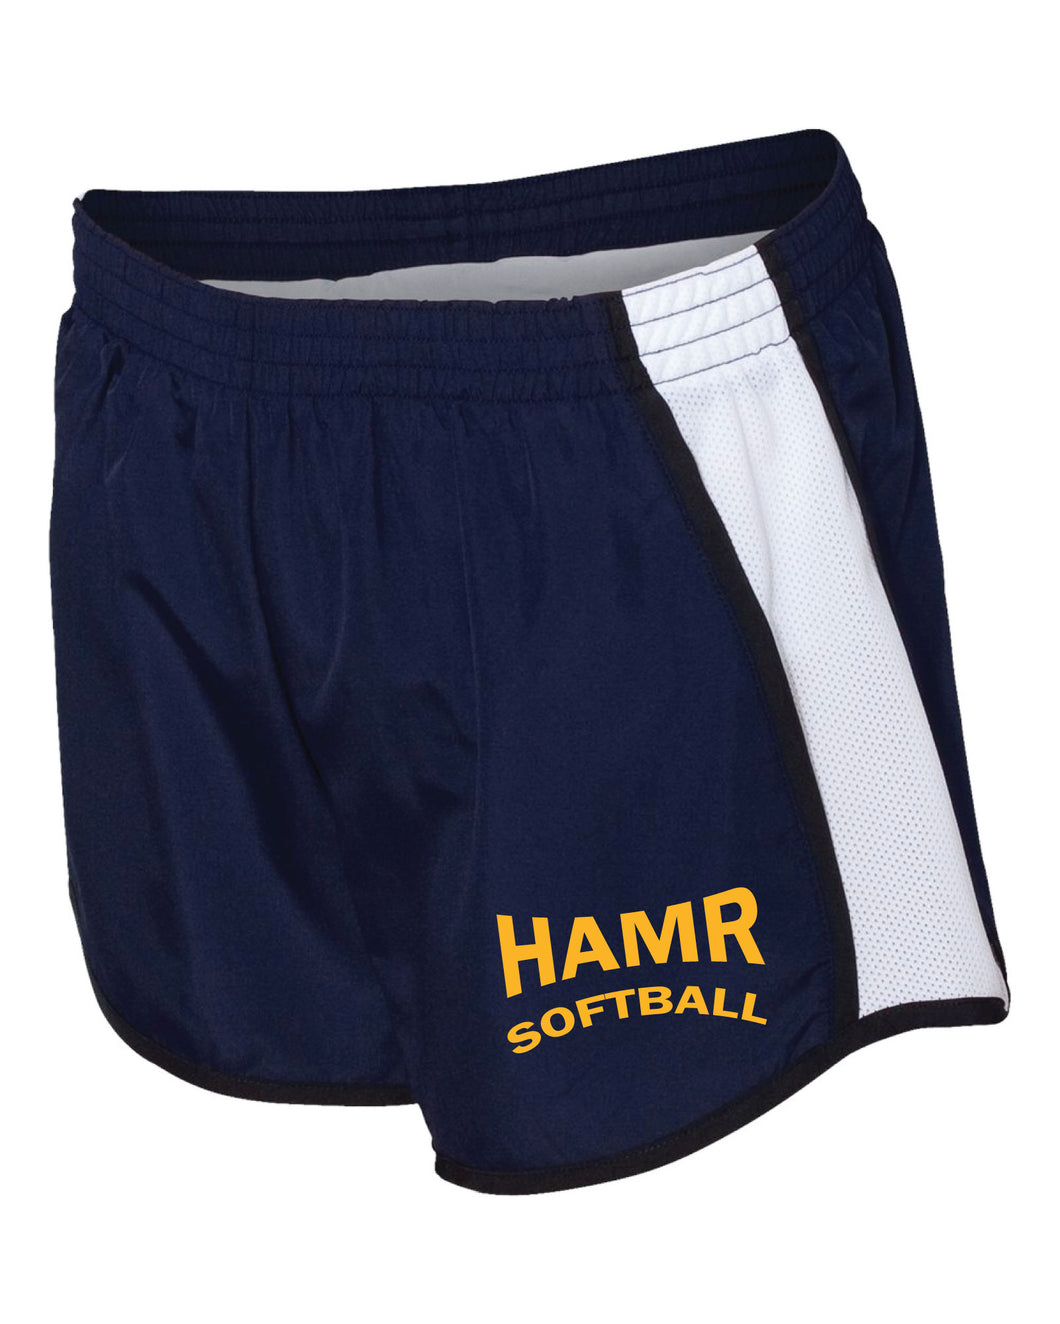 HAMR Softball Athletic Shorts - Navy - 5KounT2018